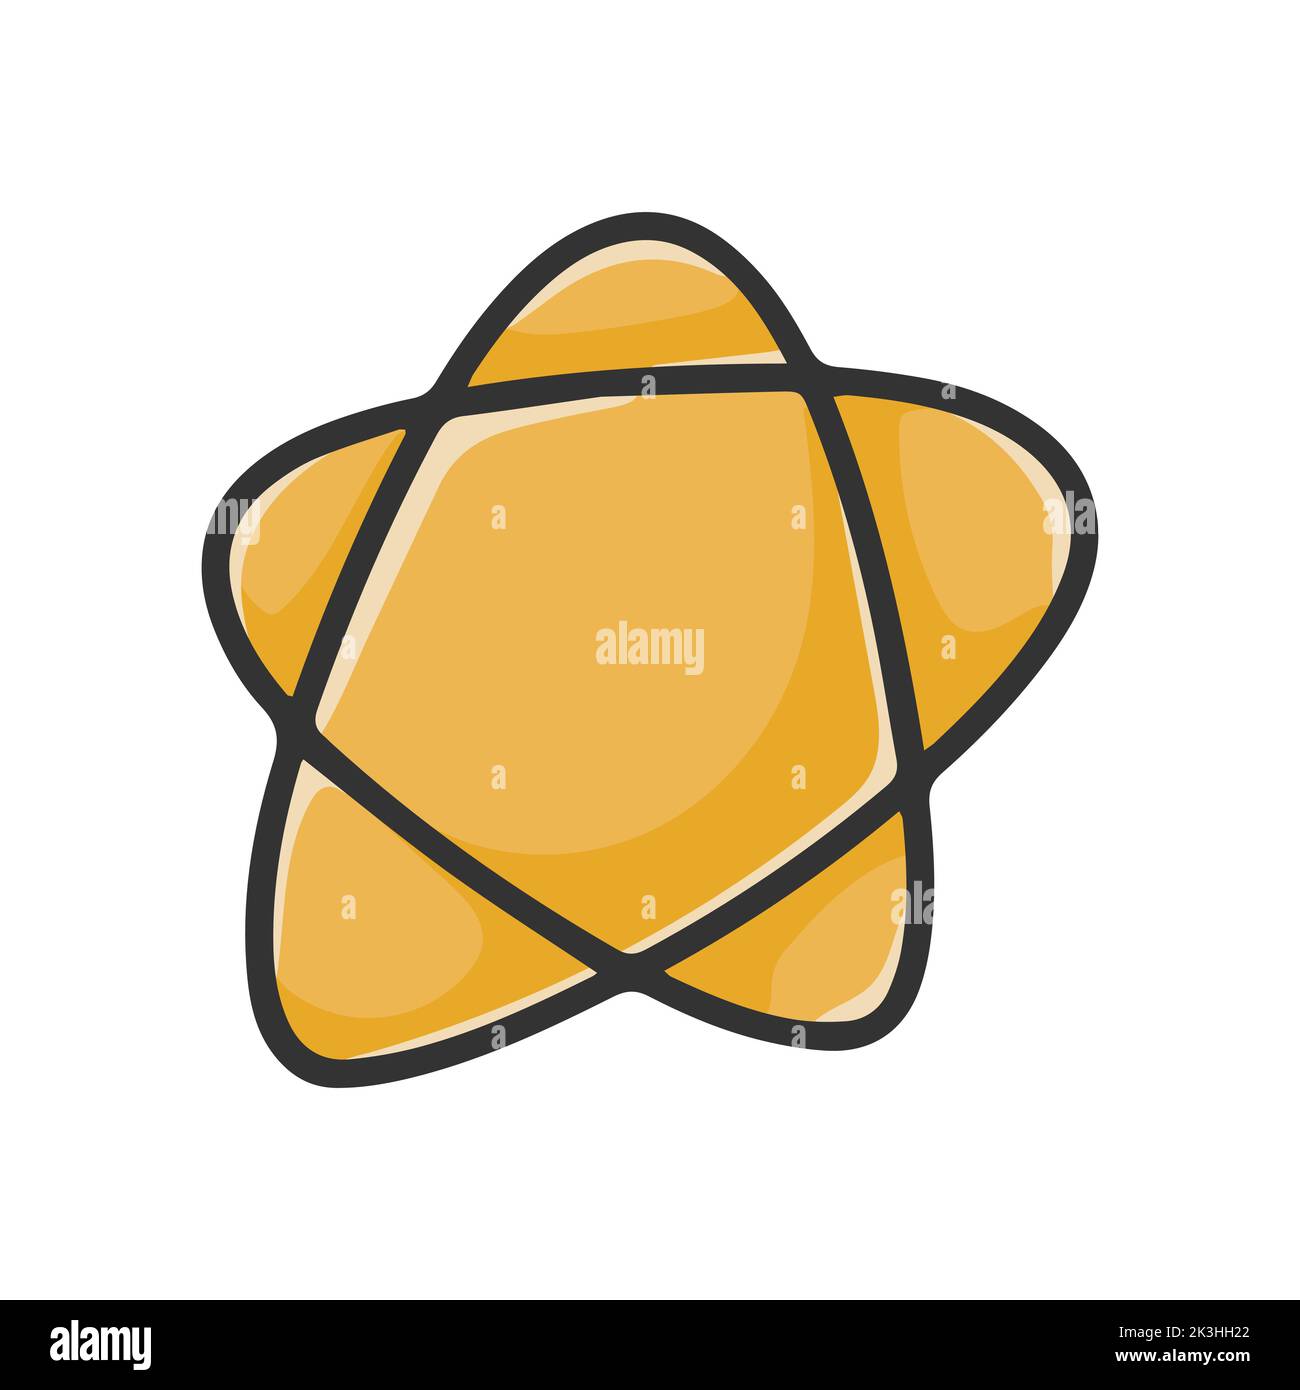 Star cartoon clipart. Single cute yellow asterisk isolated vector illustration Stock Vector